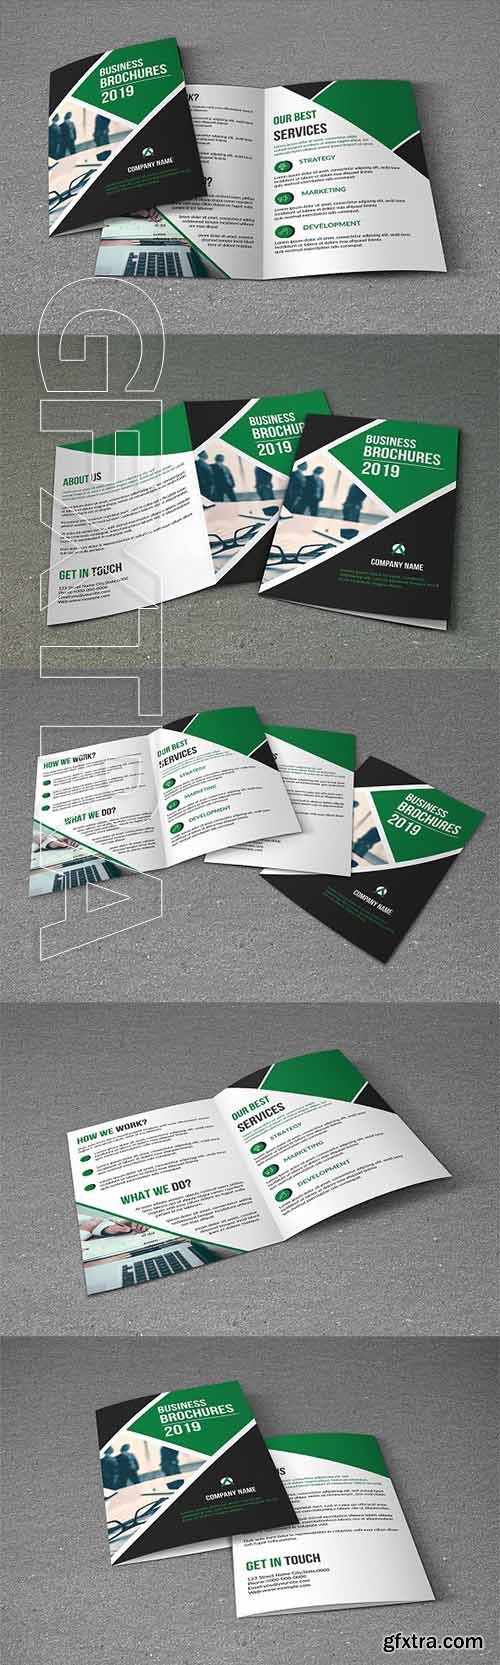 CreativeMarket - Corporate Bi-fold Brochure V815 2863950